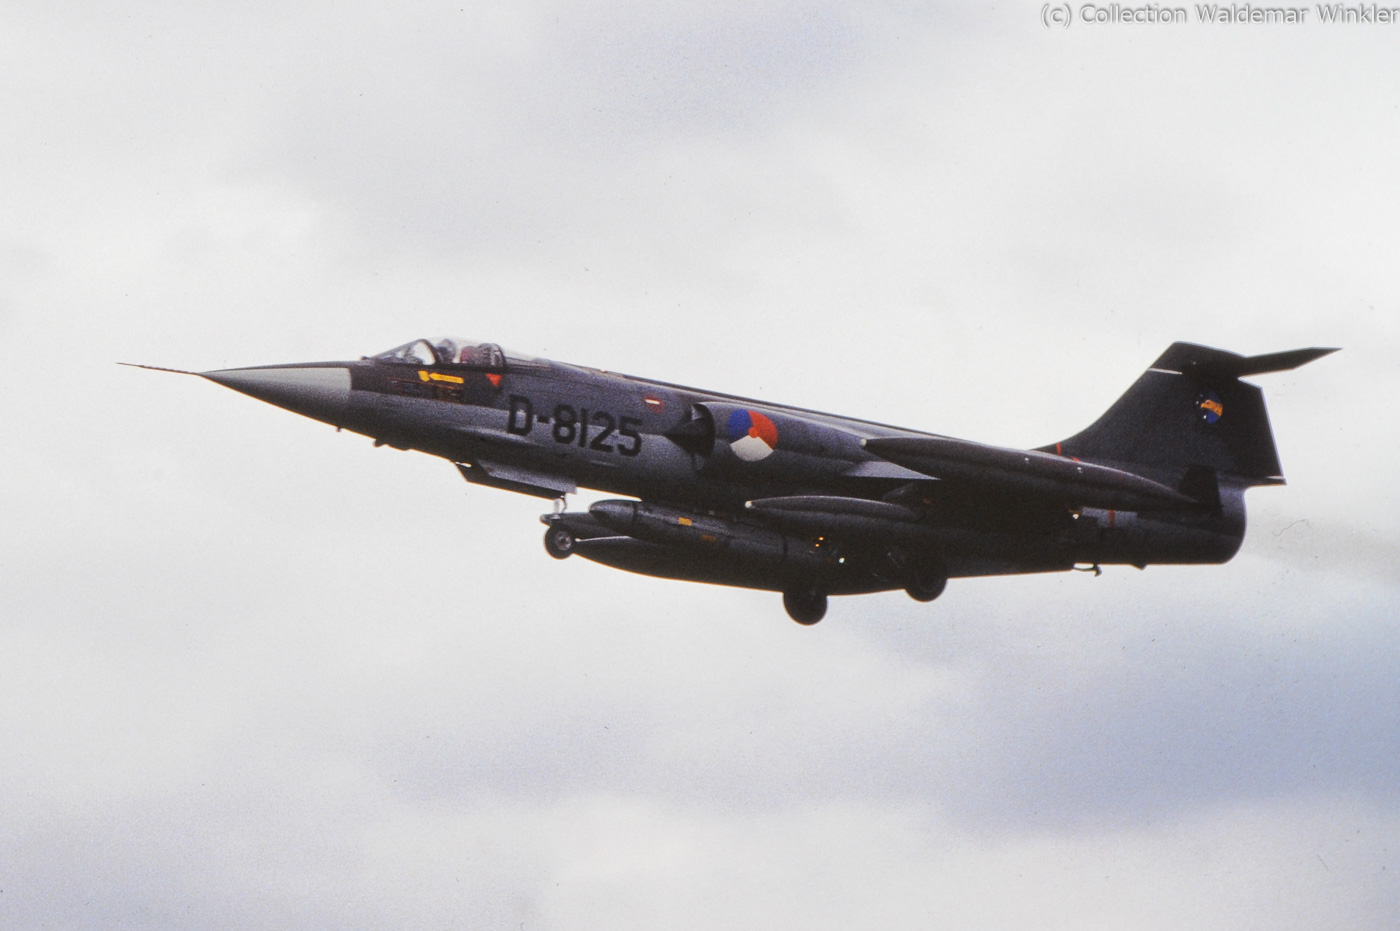 F-104_G__Starfighter_DSC_1788.jpg